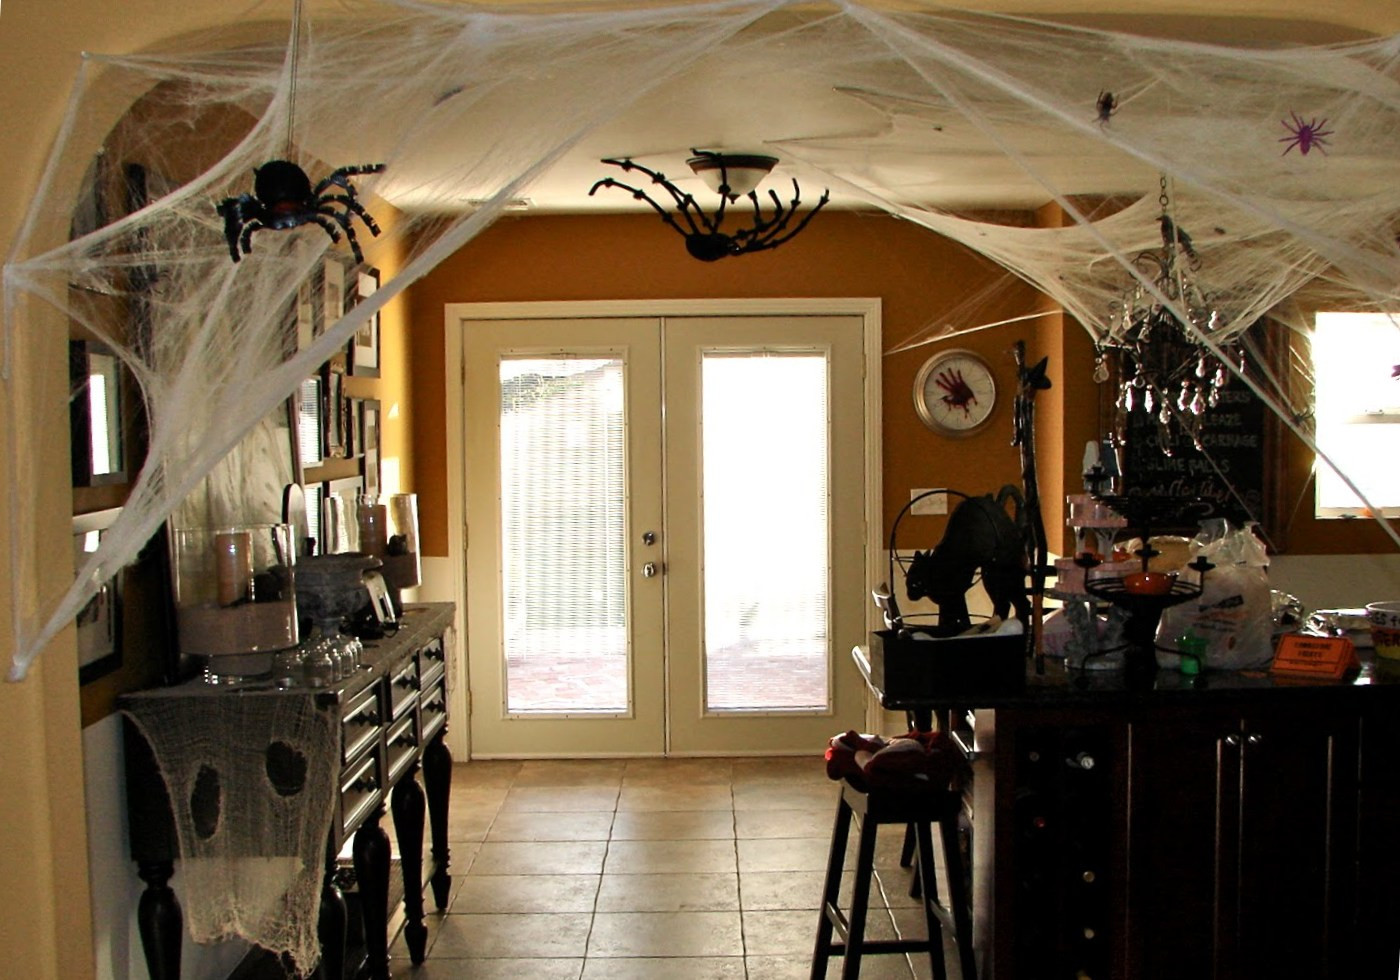 Halloween Kitchen Decorations
 plete List of Halloween Decorations Ideas In Your Home